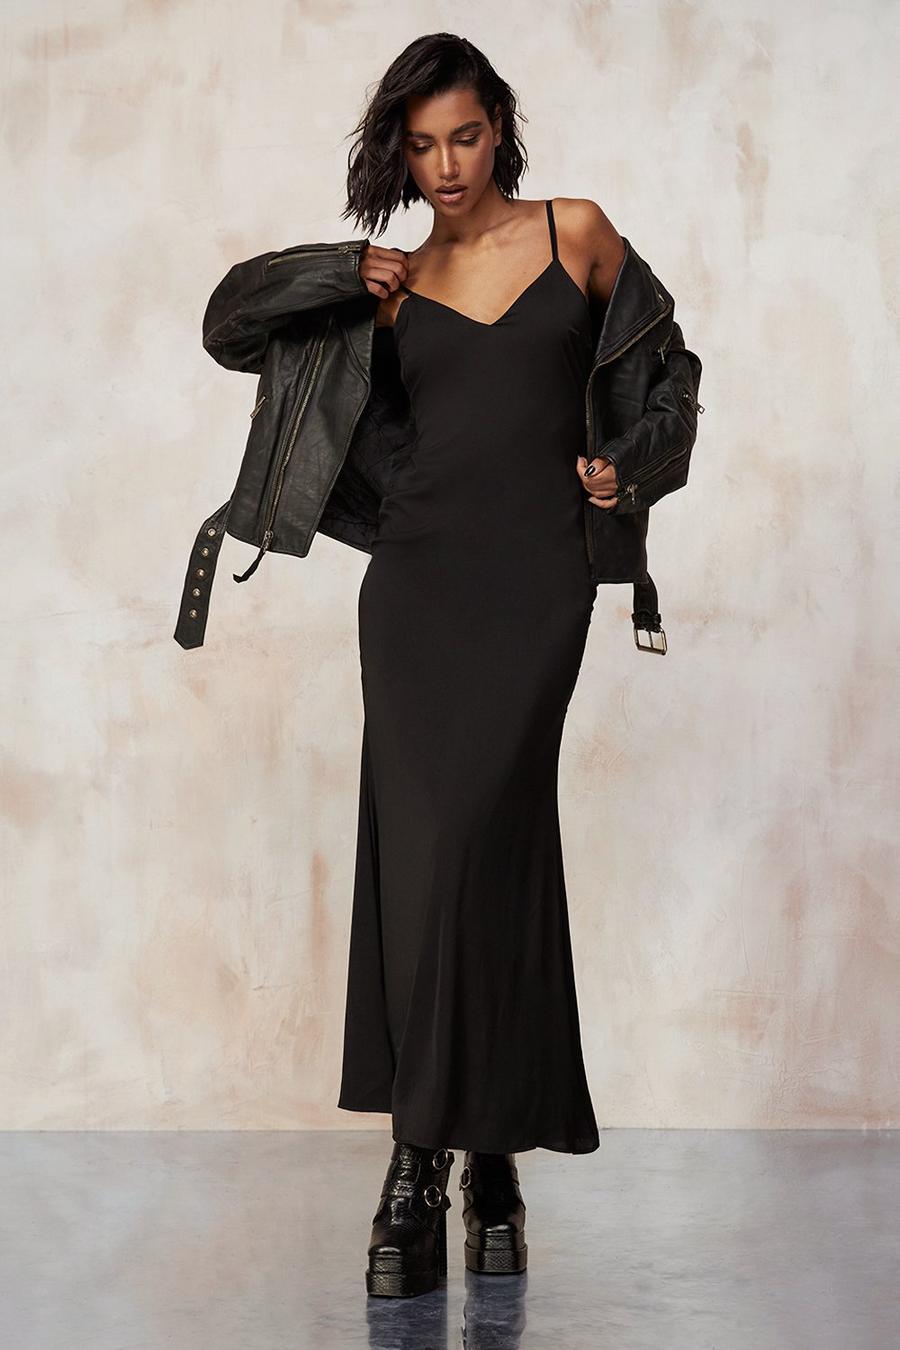 Black Kourtney Kardashian Barker Maxi Satin Dress